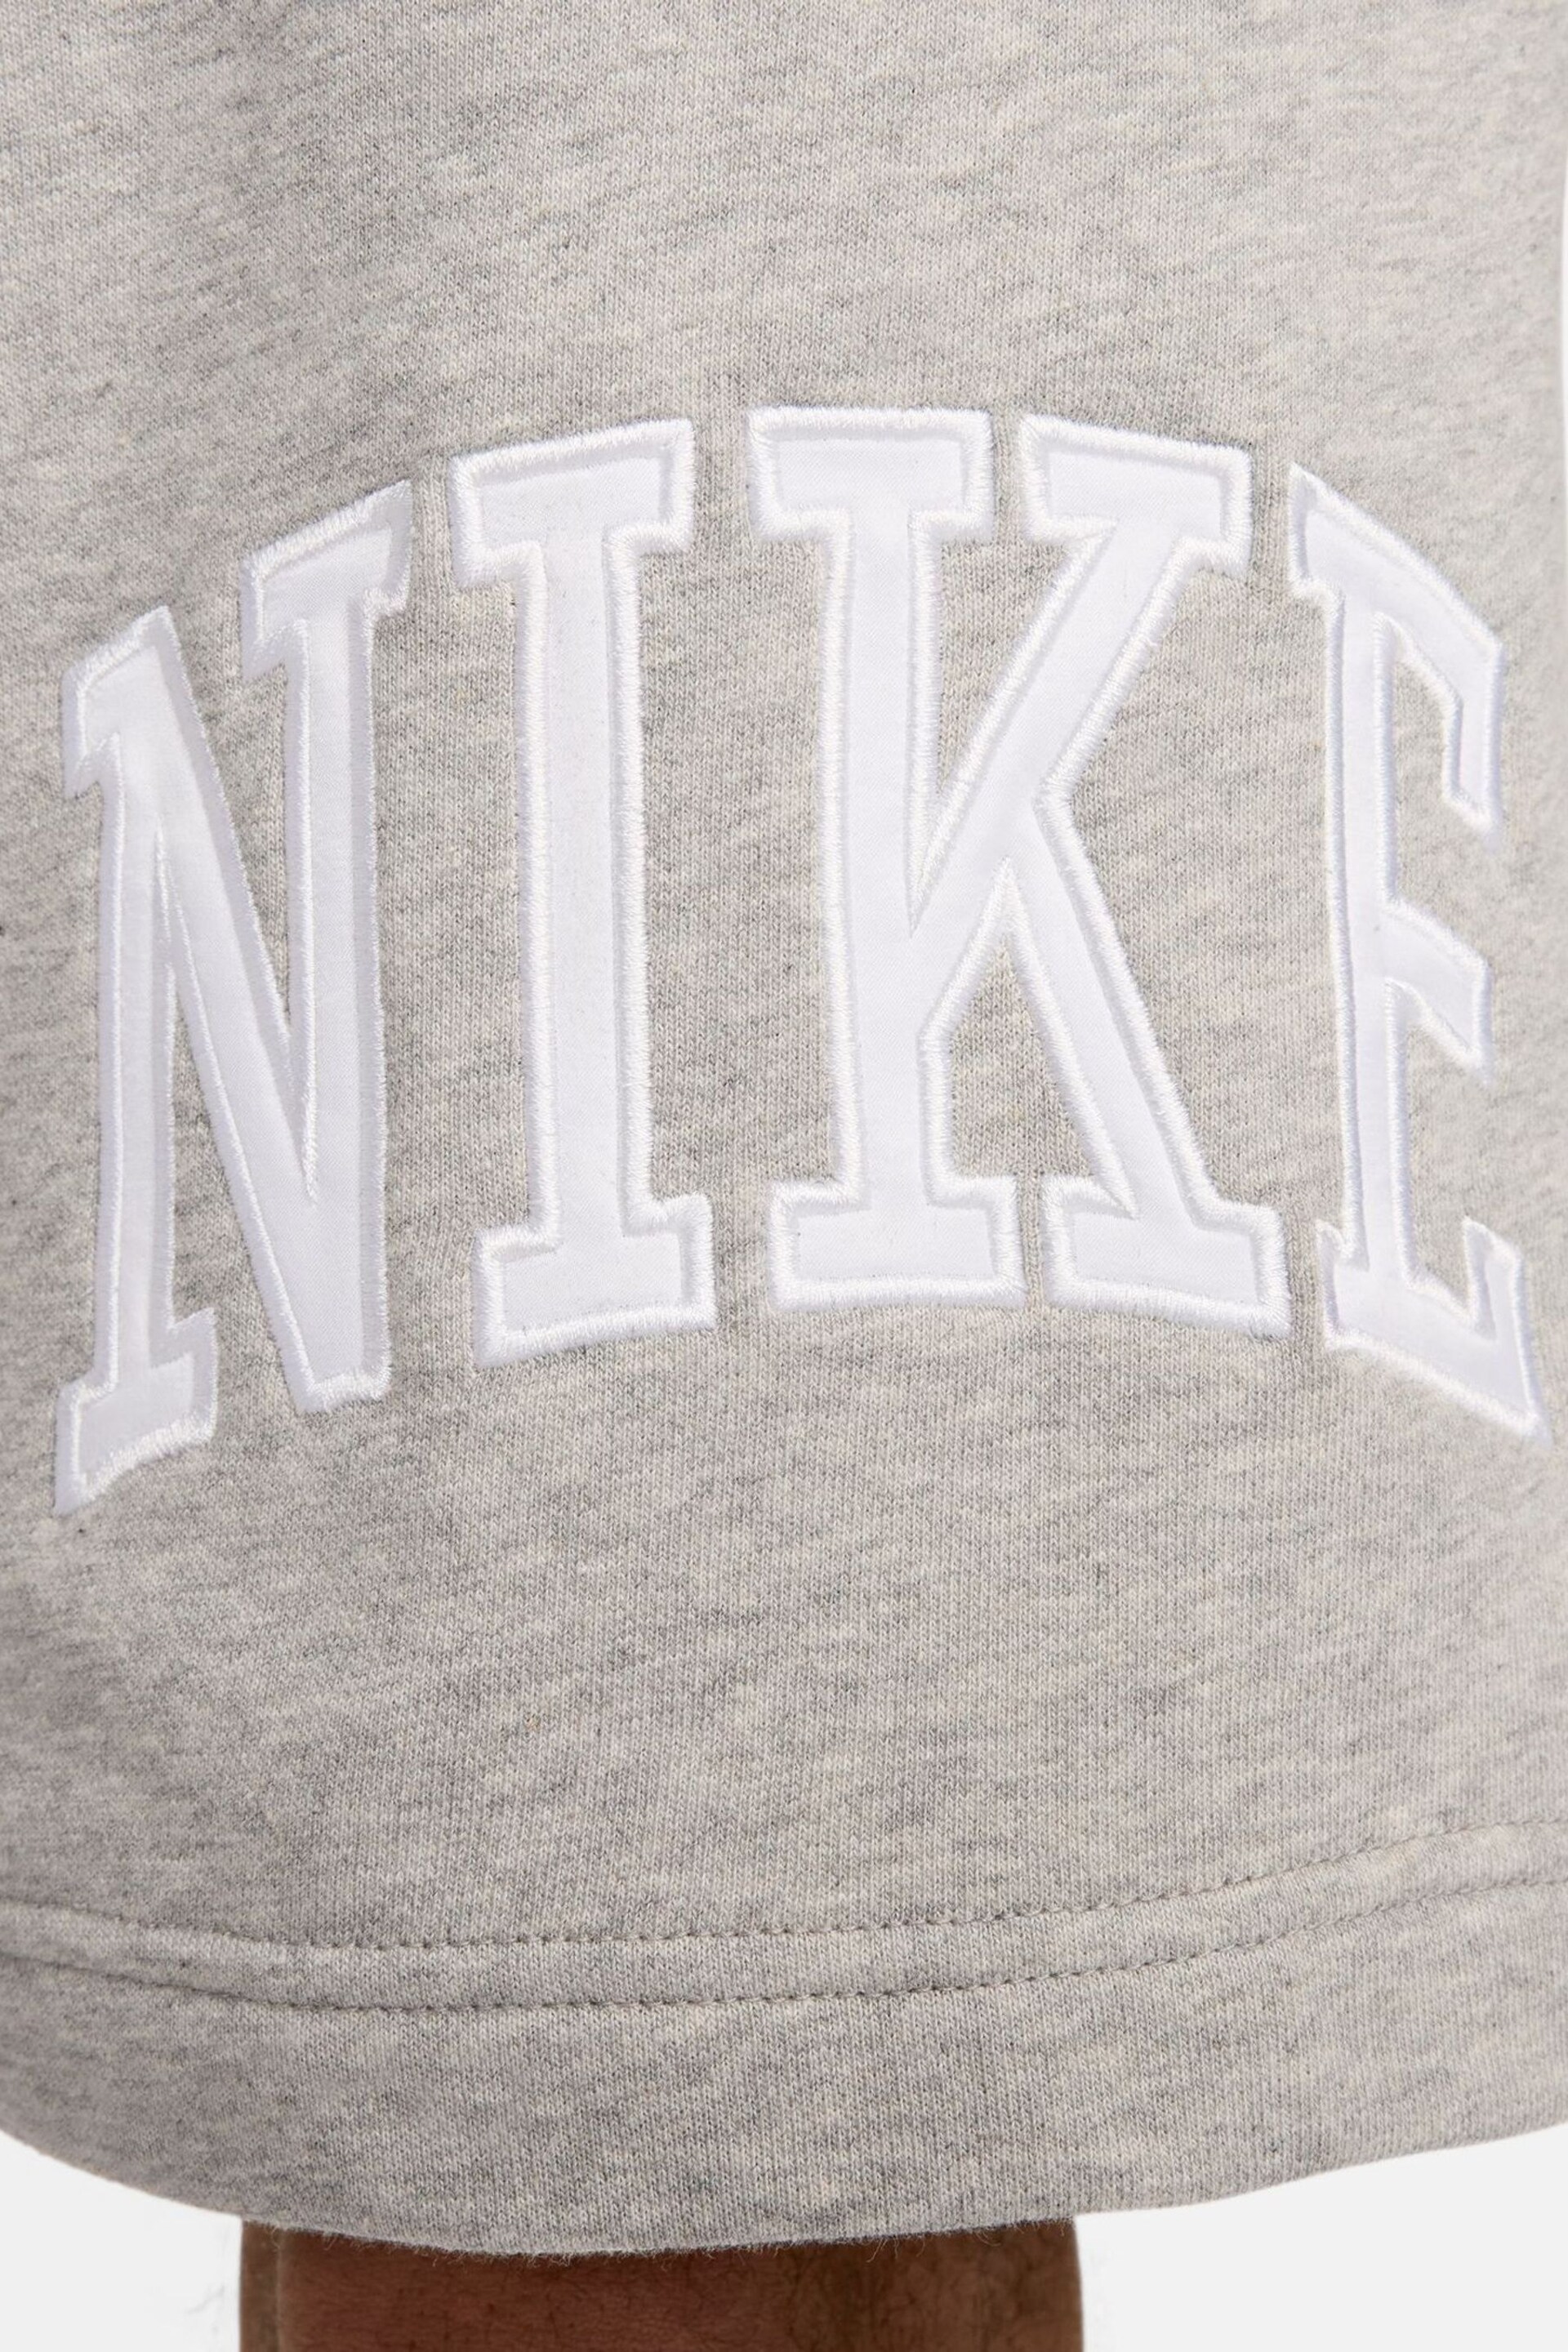 Nike Dark Grey Club Fleece French Terry Shorts - Image 5 of 7